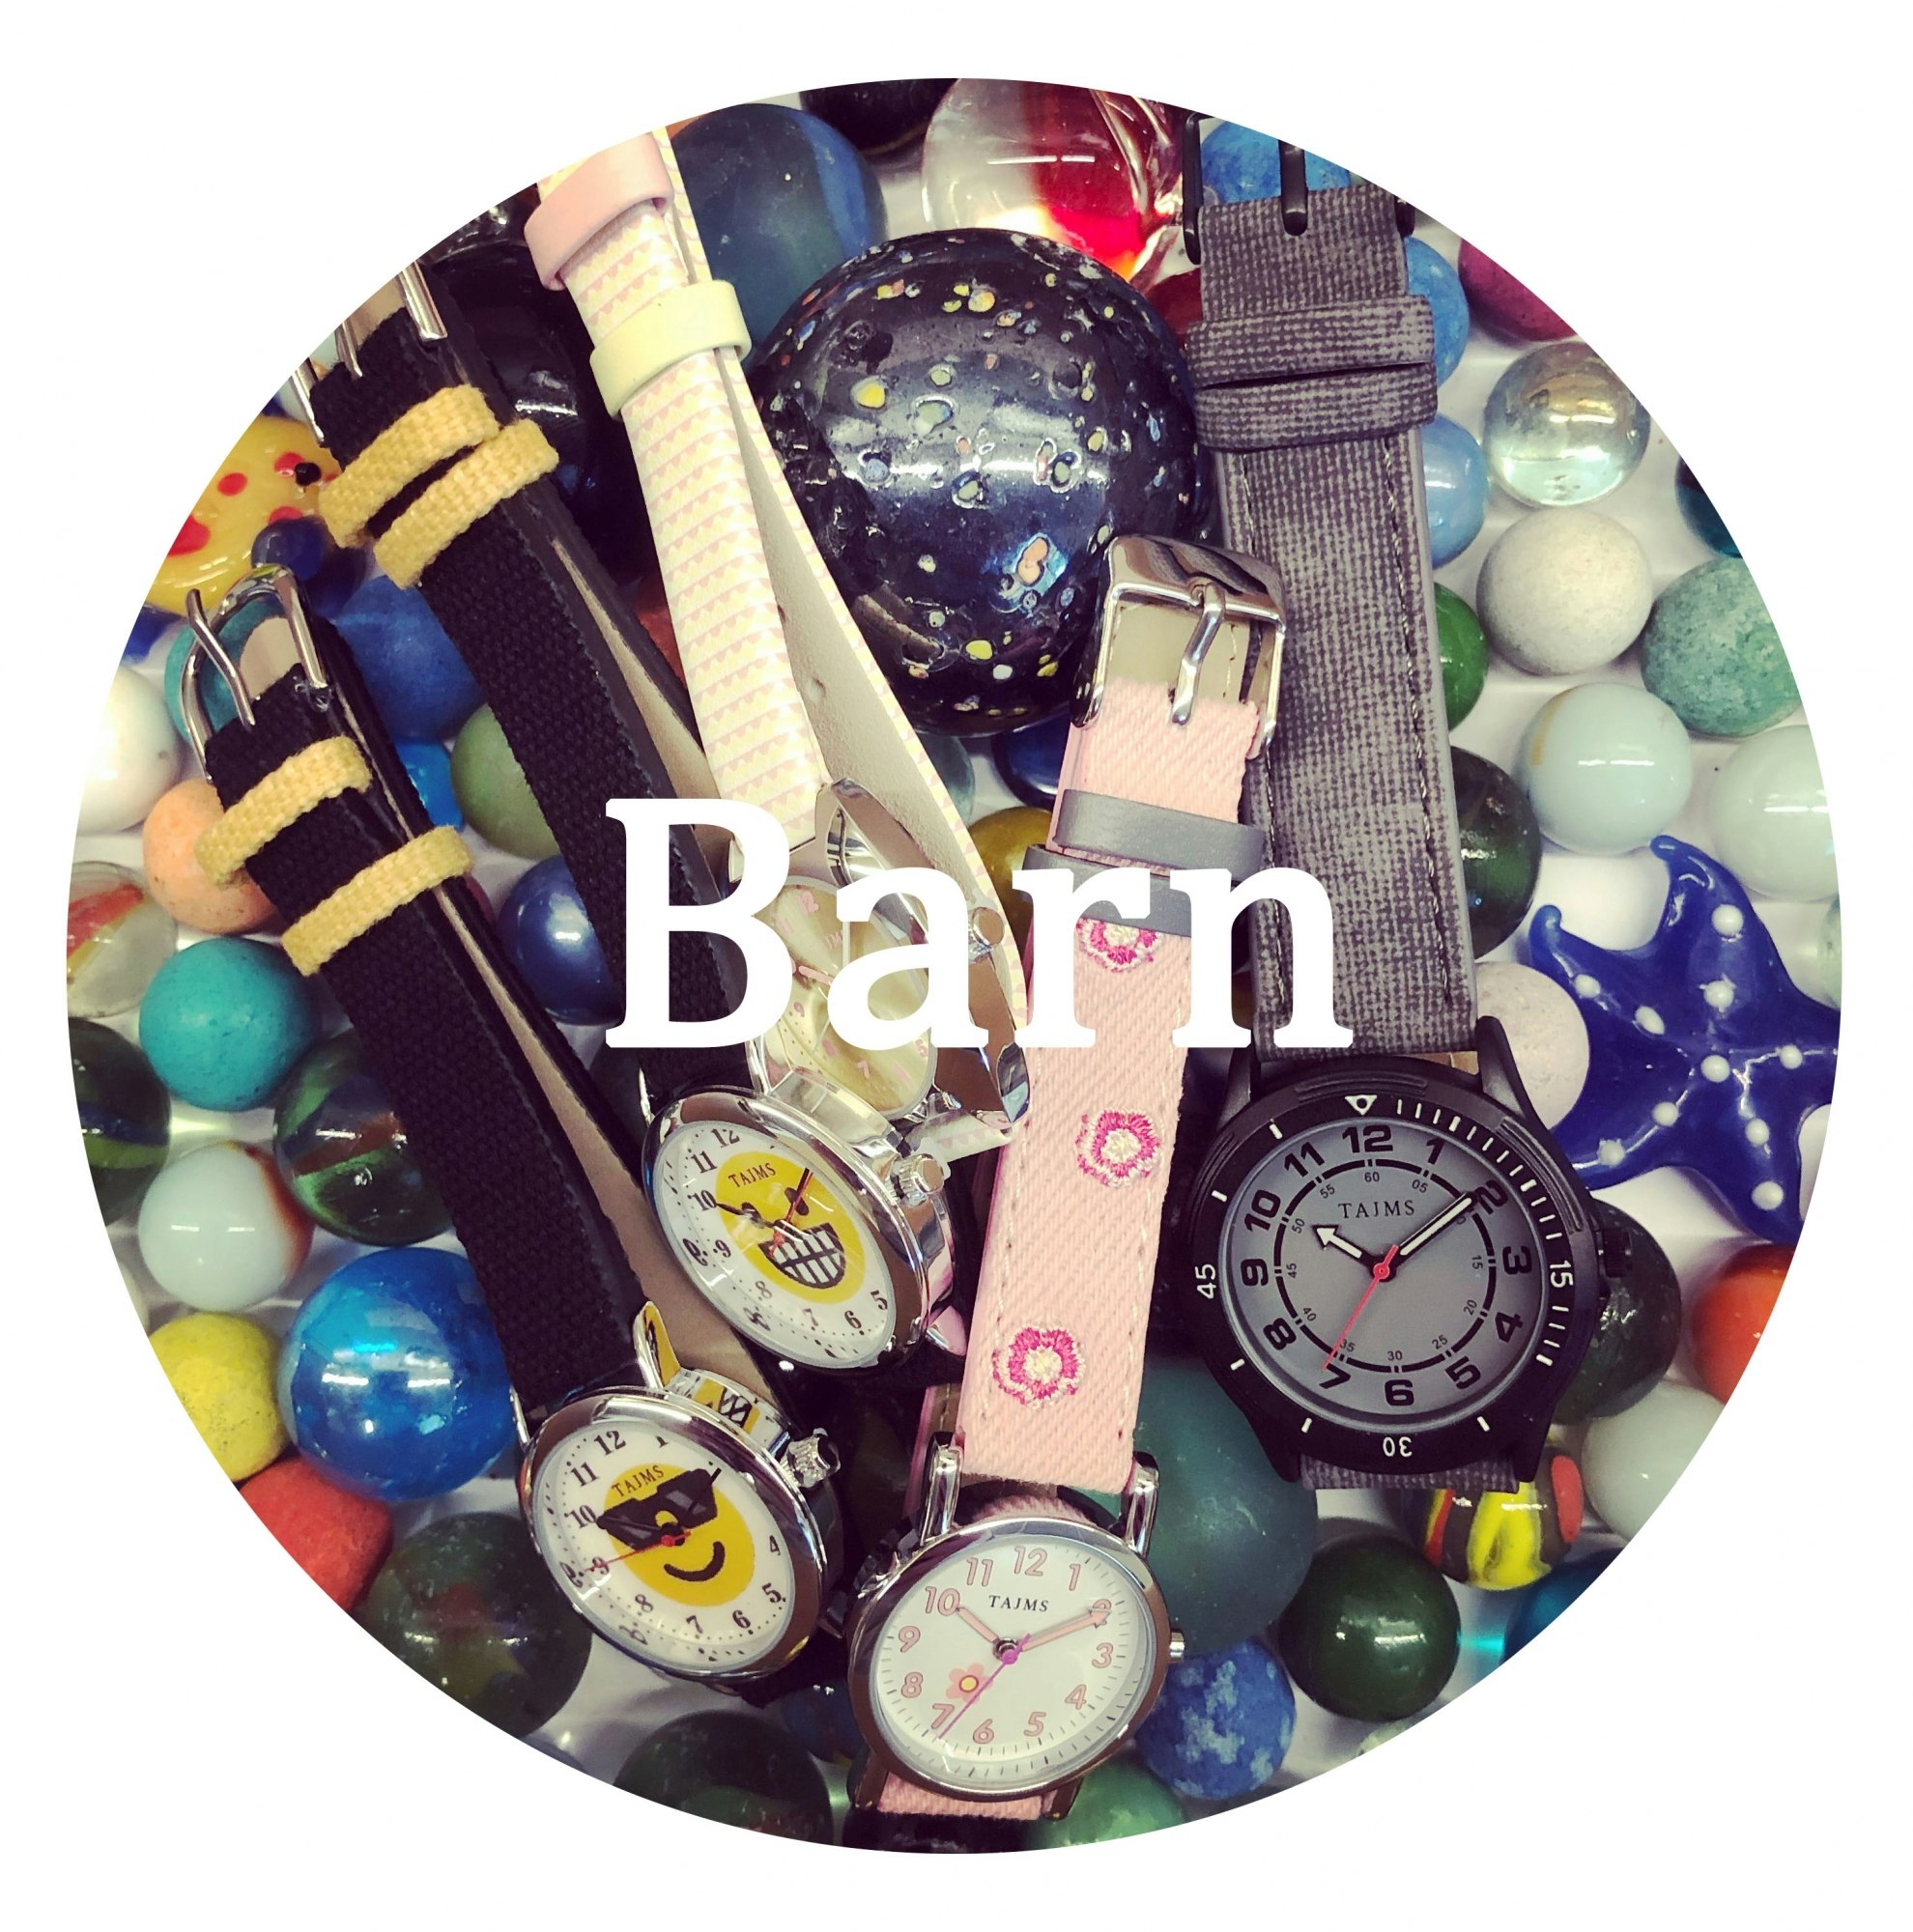 BARN - Tajms Collection